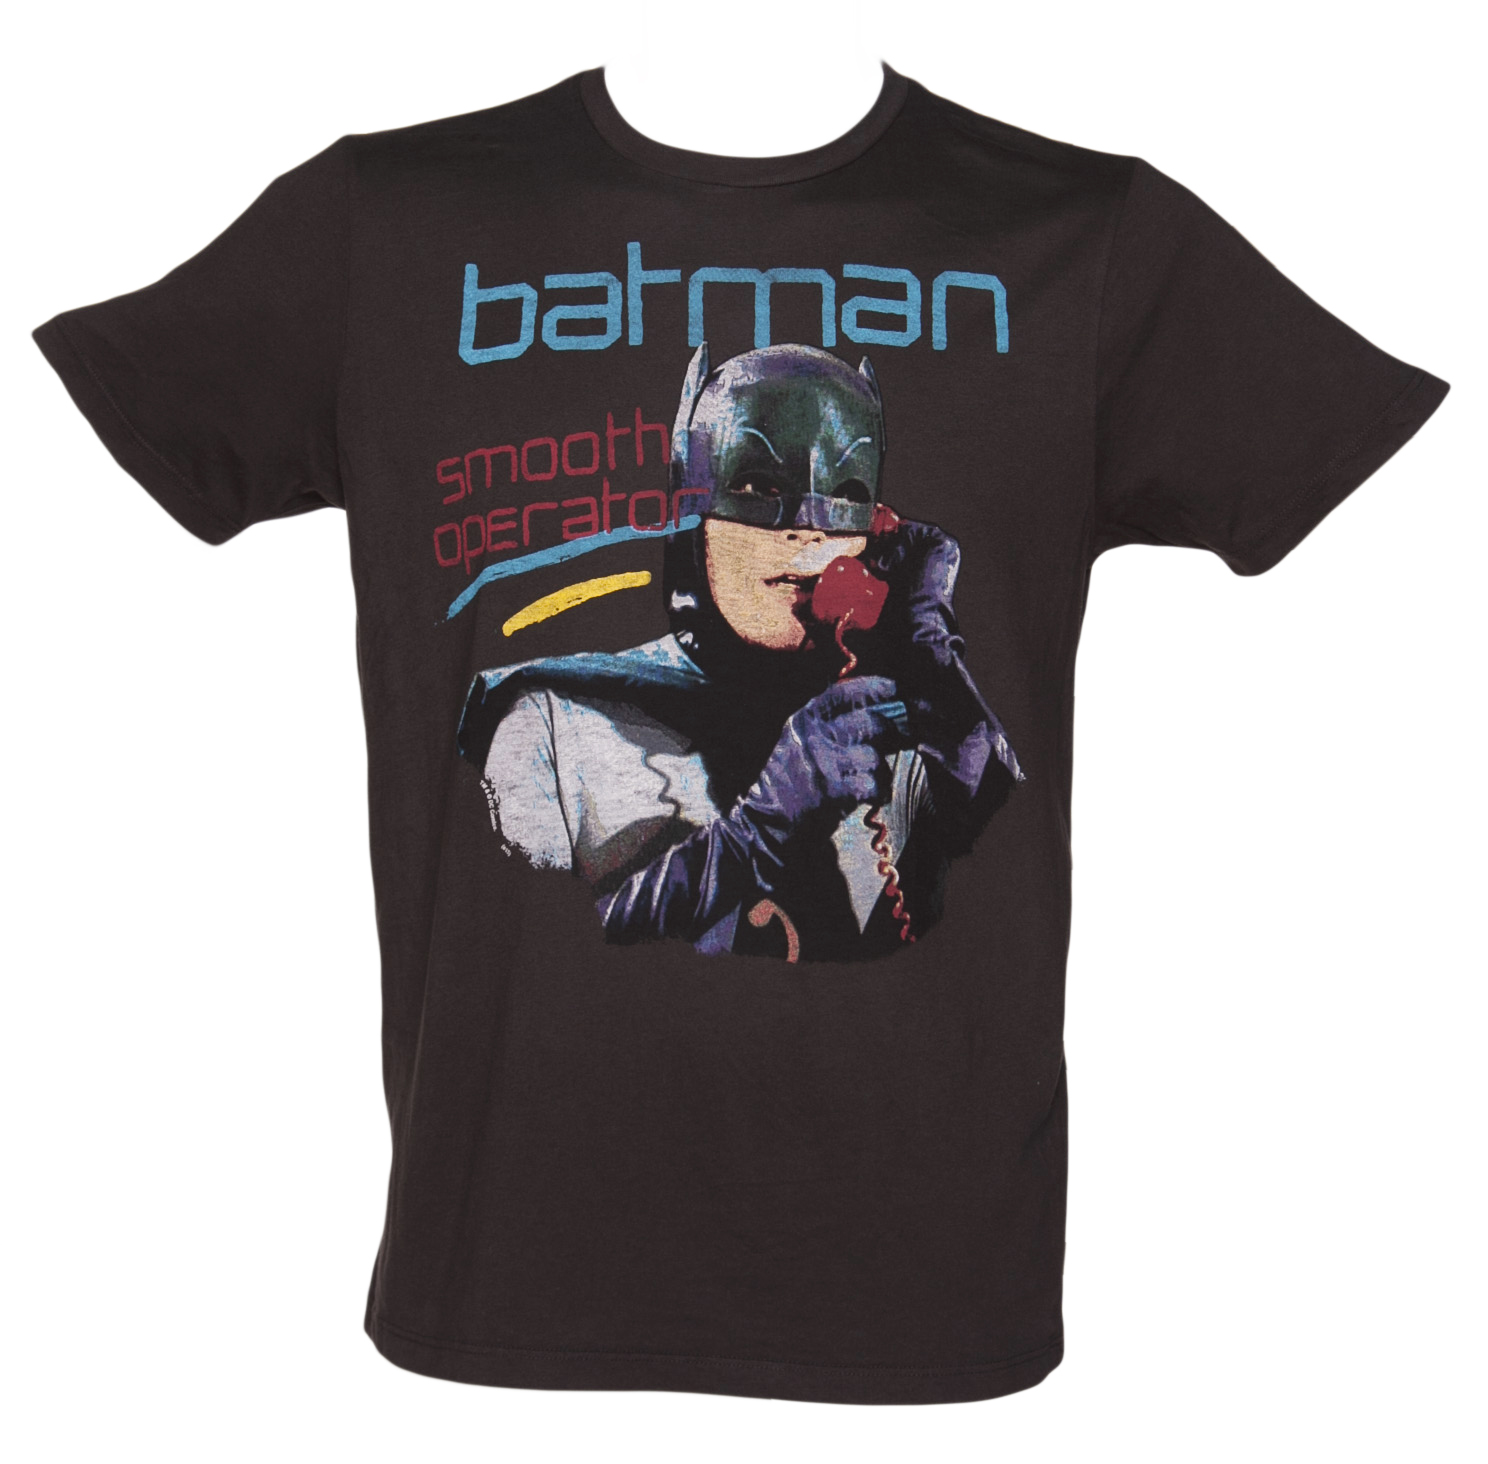 Mens Black Smooth Operator Batman T-Shirt from